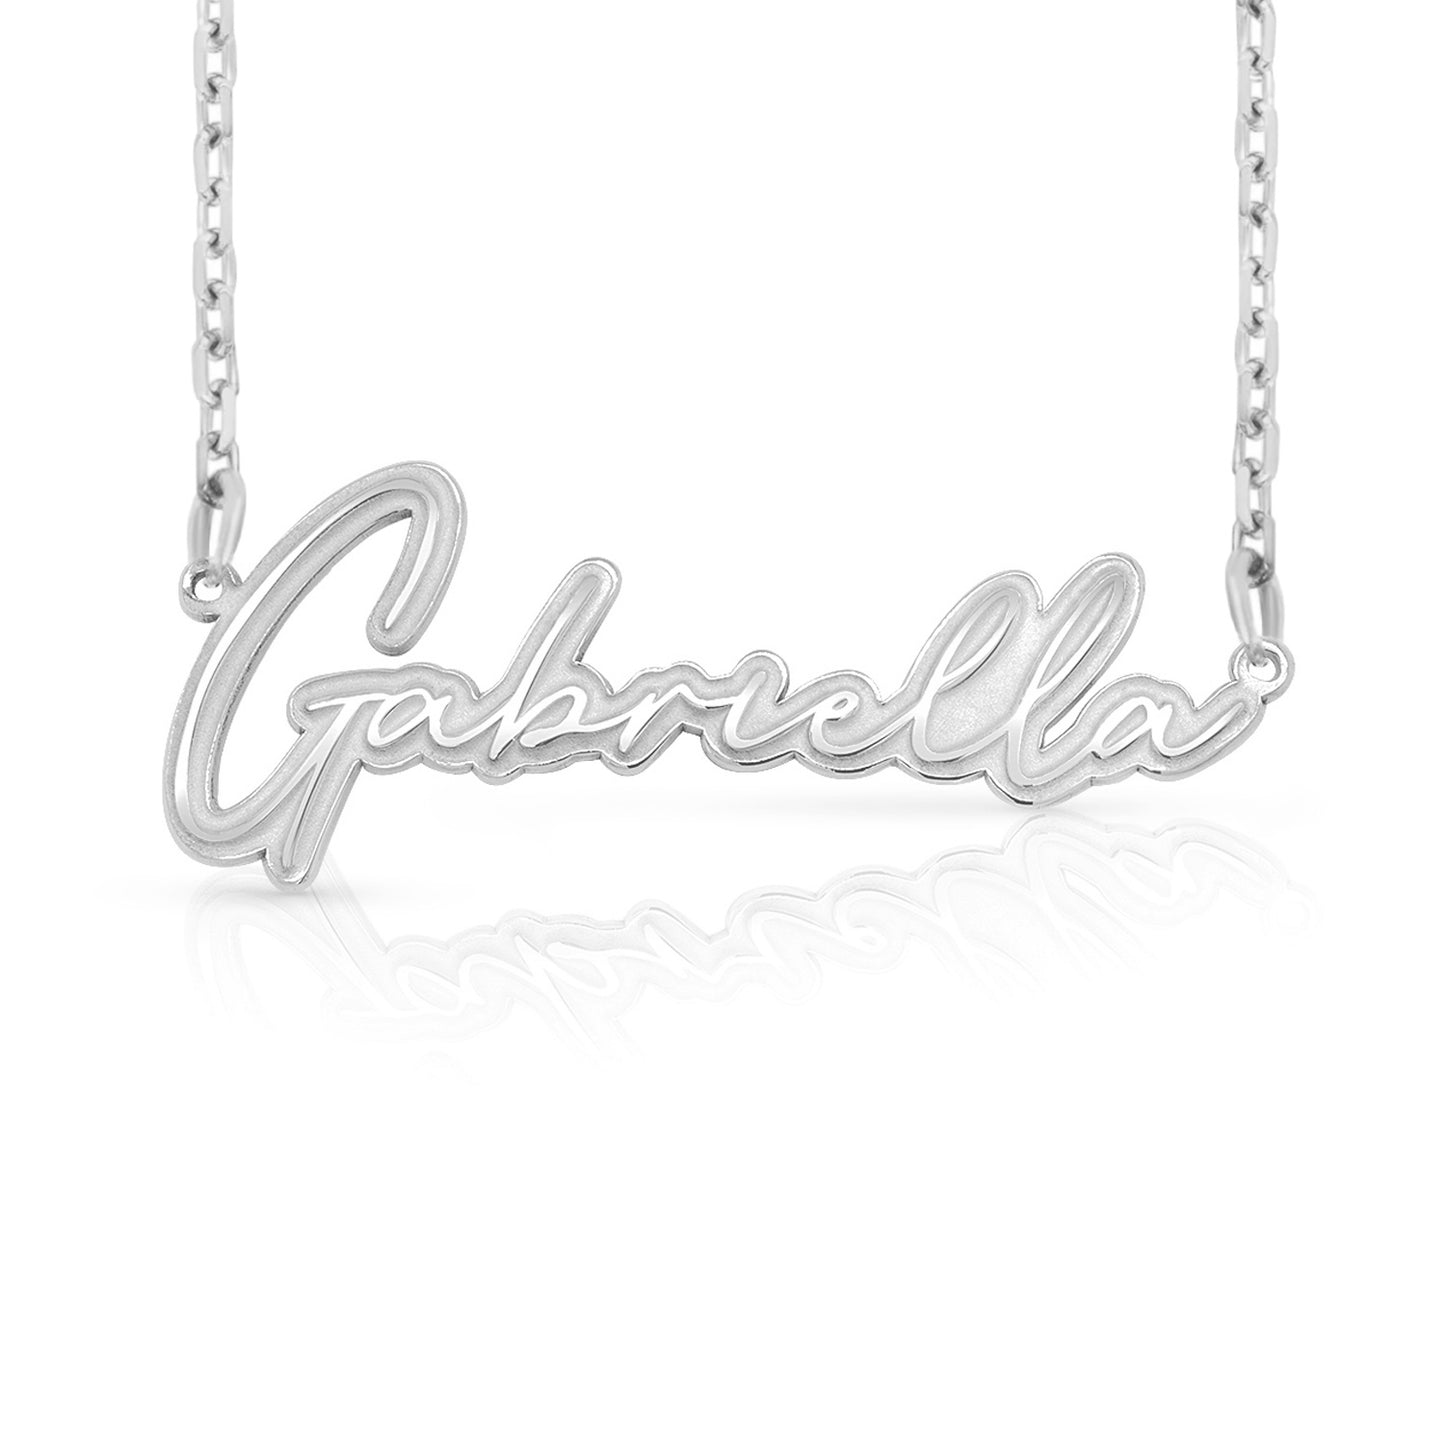 14 Karat "Gabriella" Style Nameplate